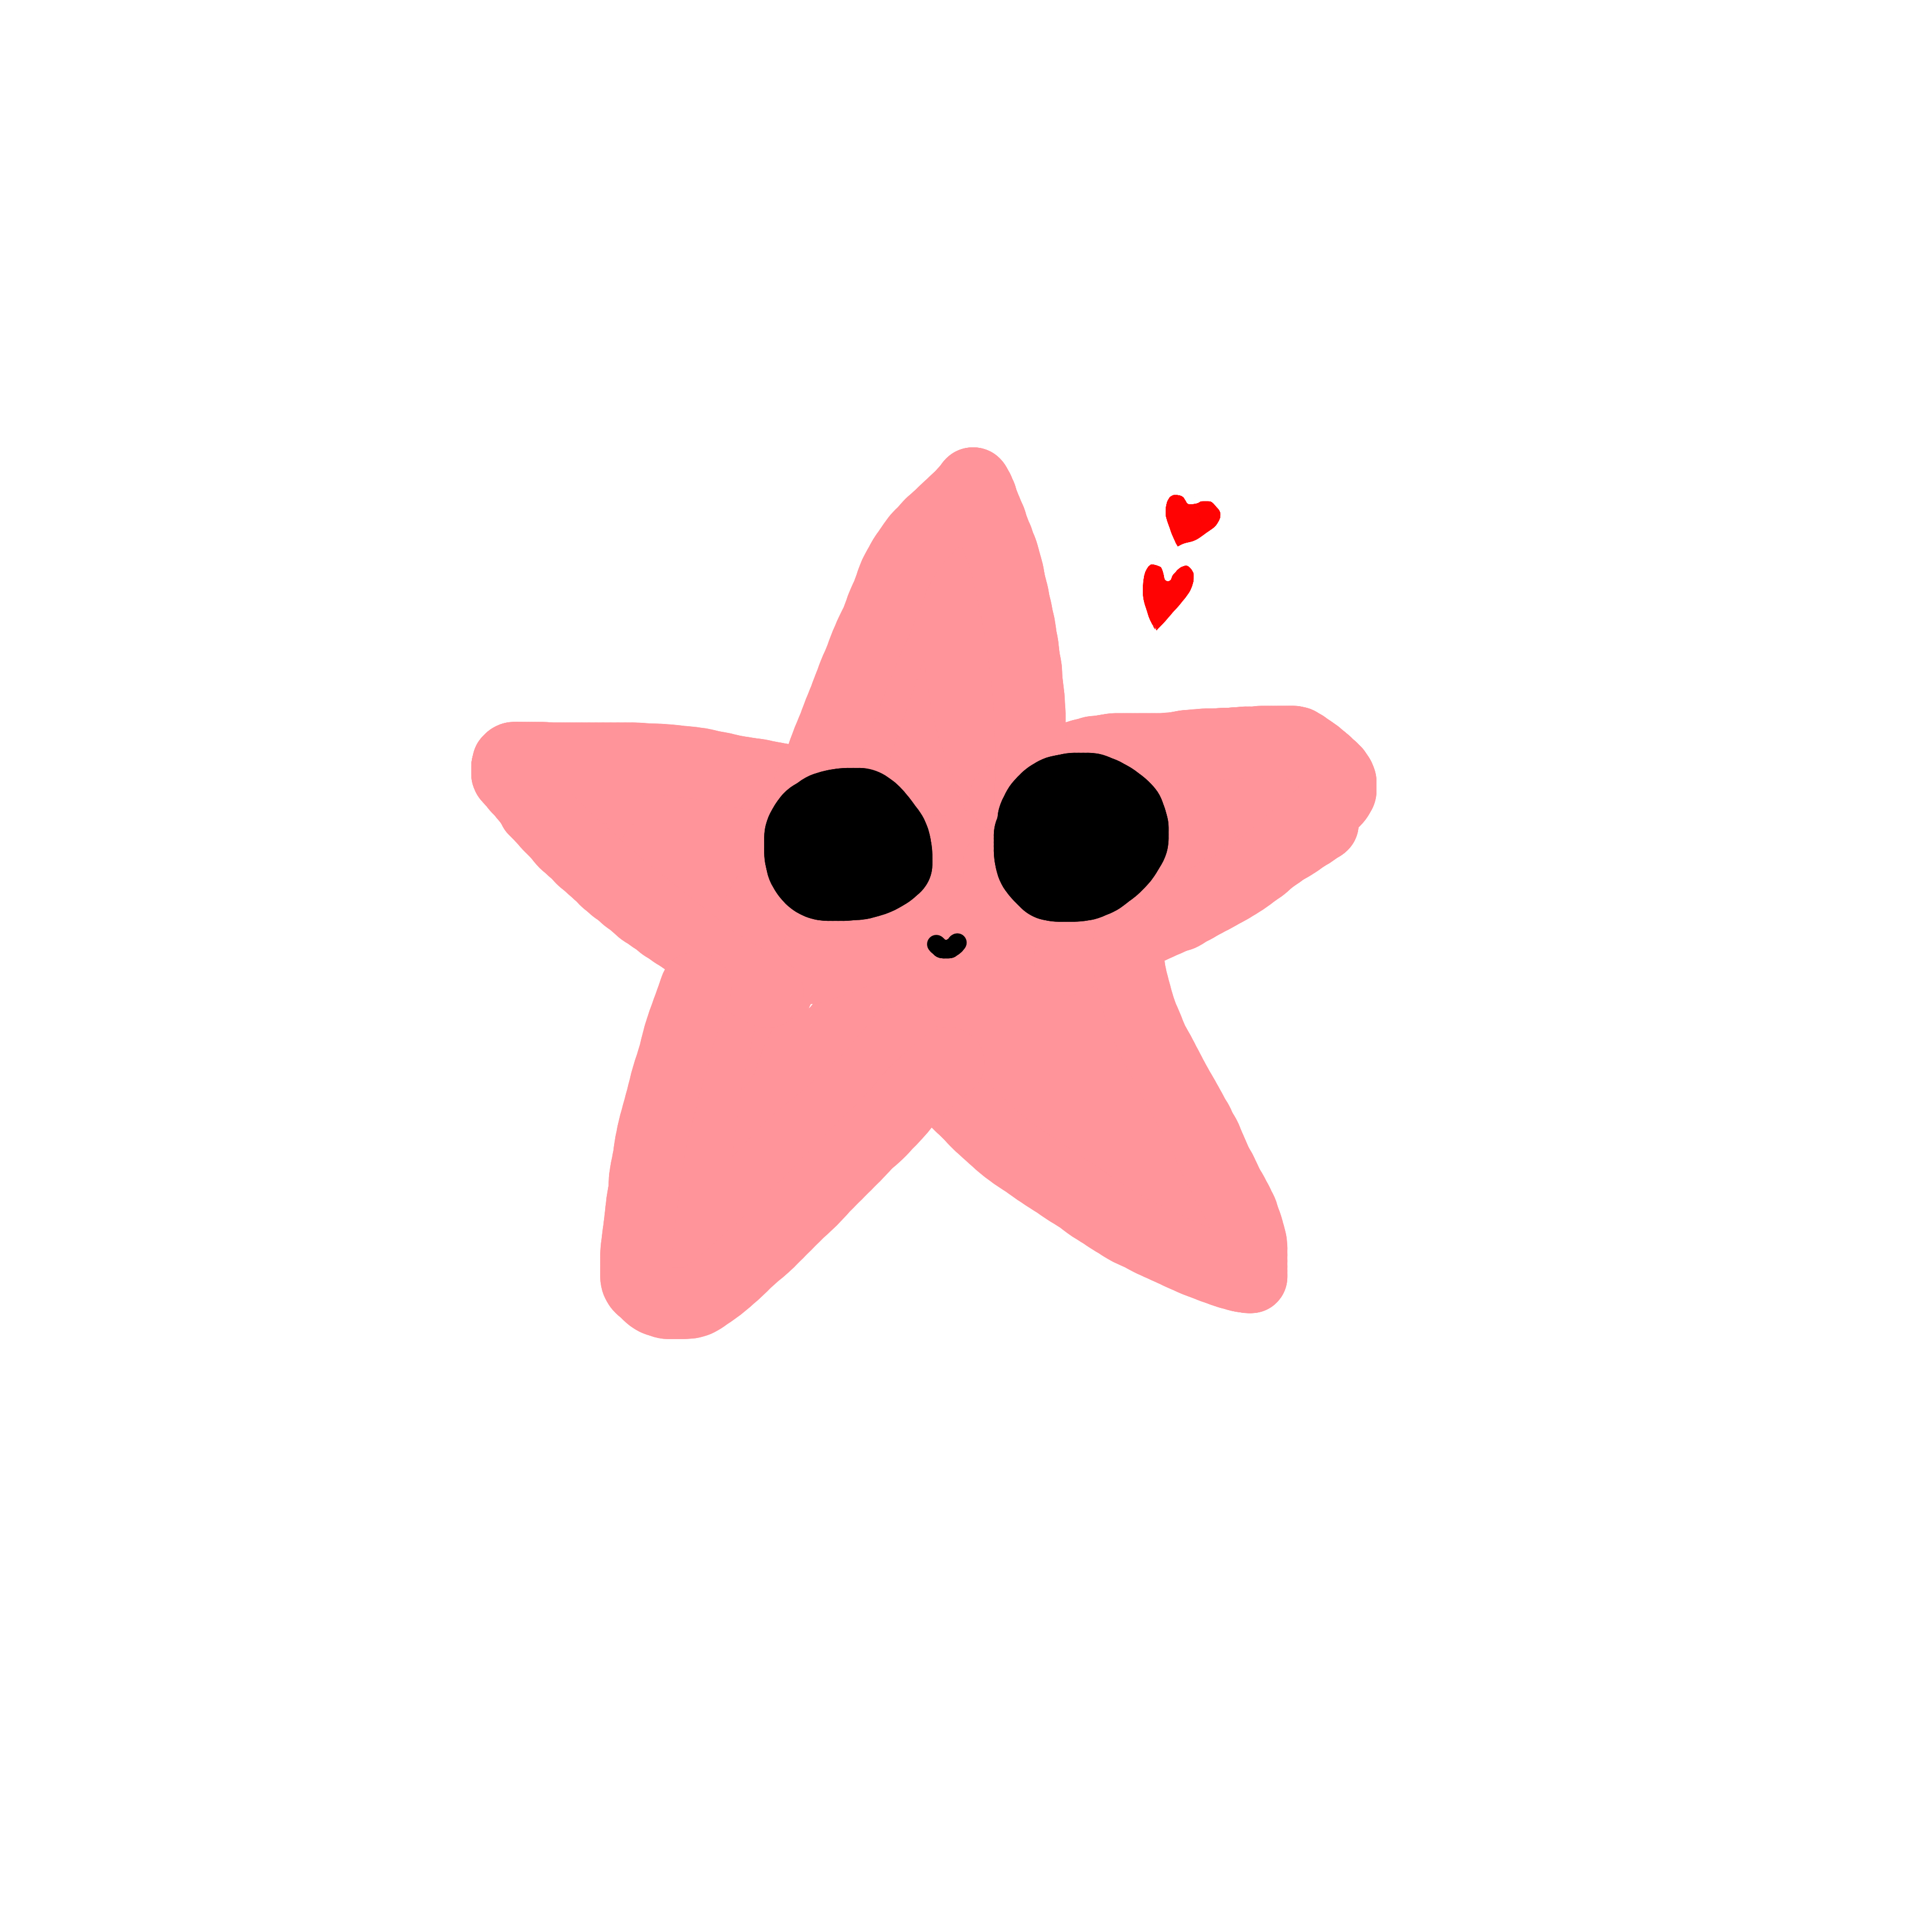 freetoedit cutestars lovestar star sticker by @kathy2872